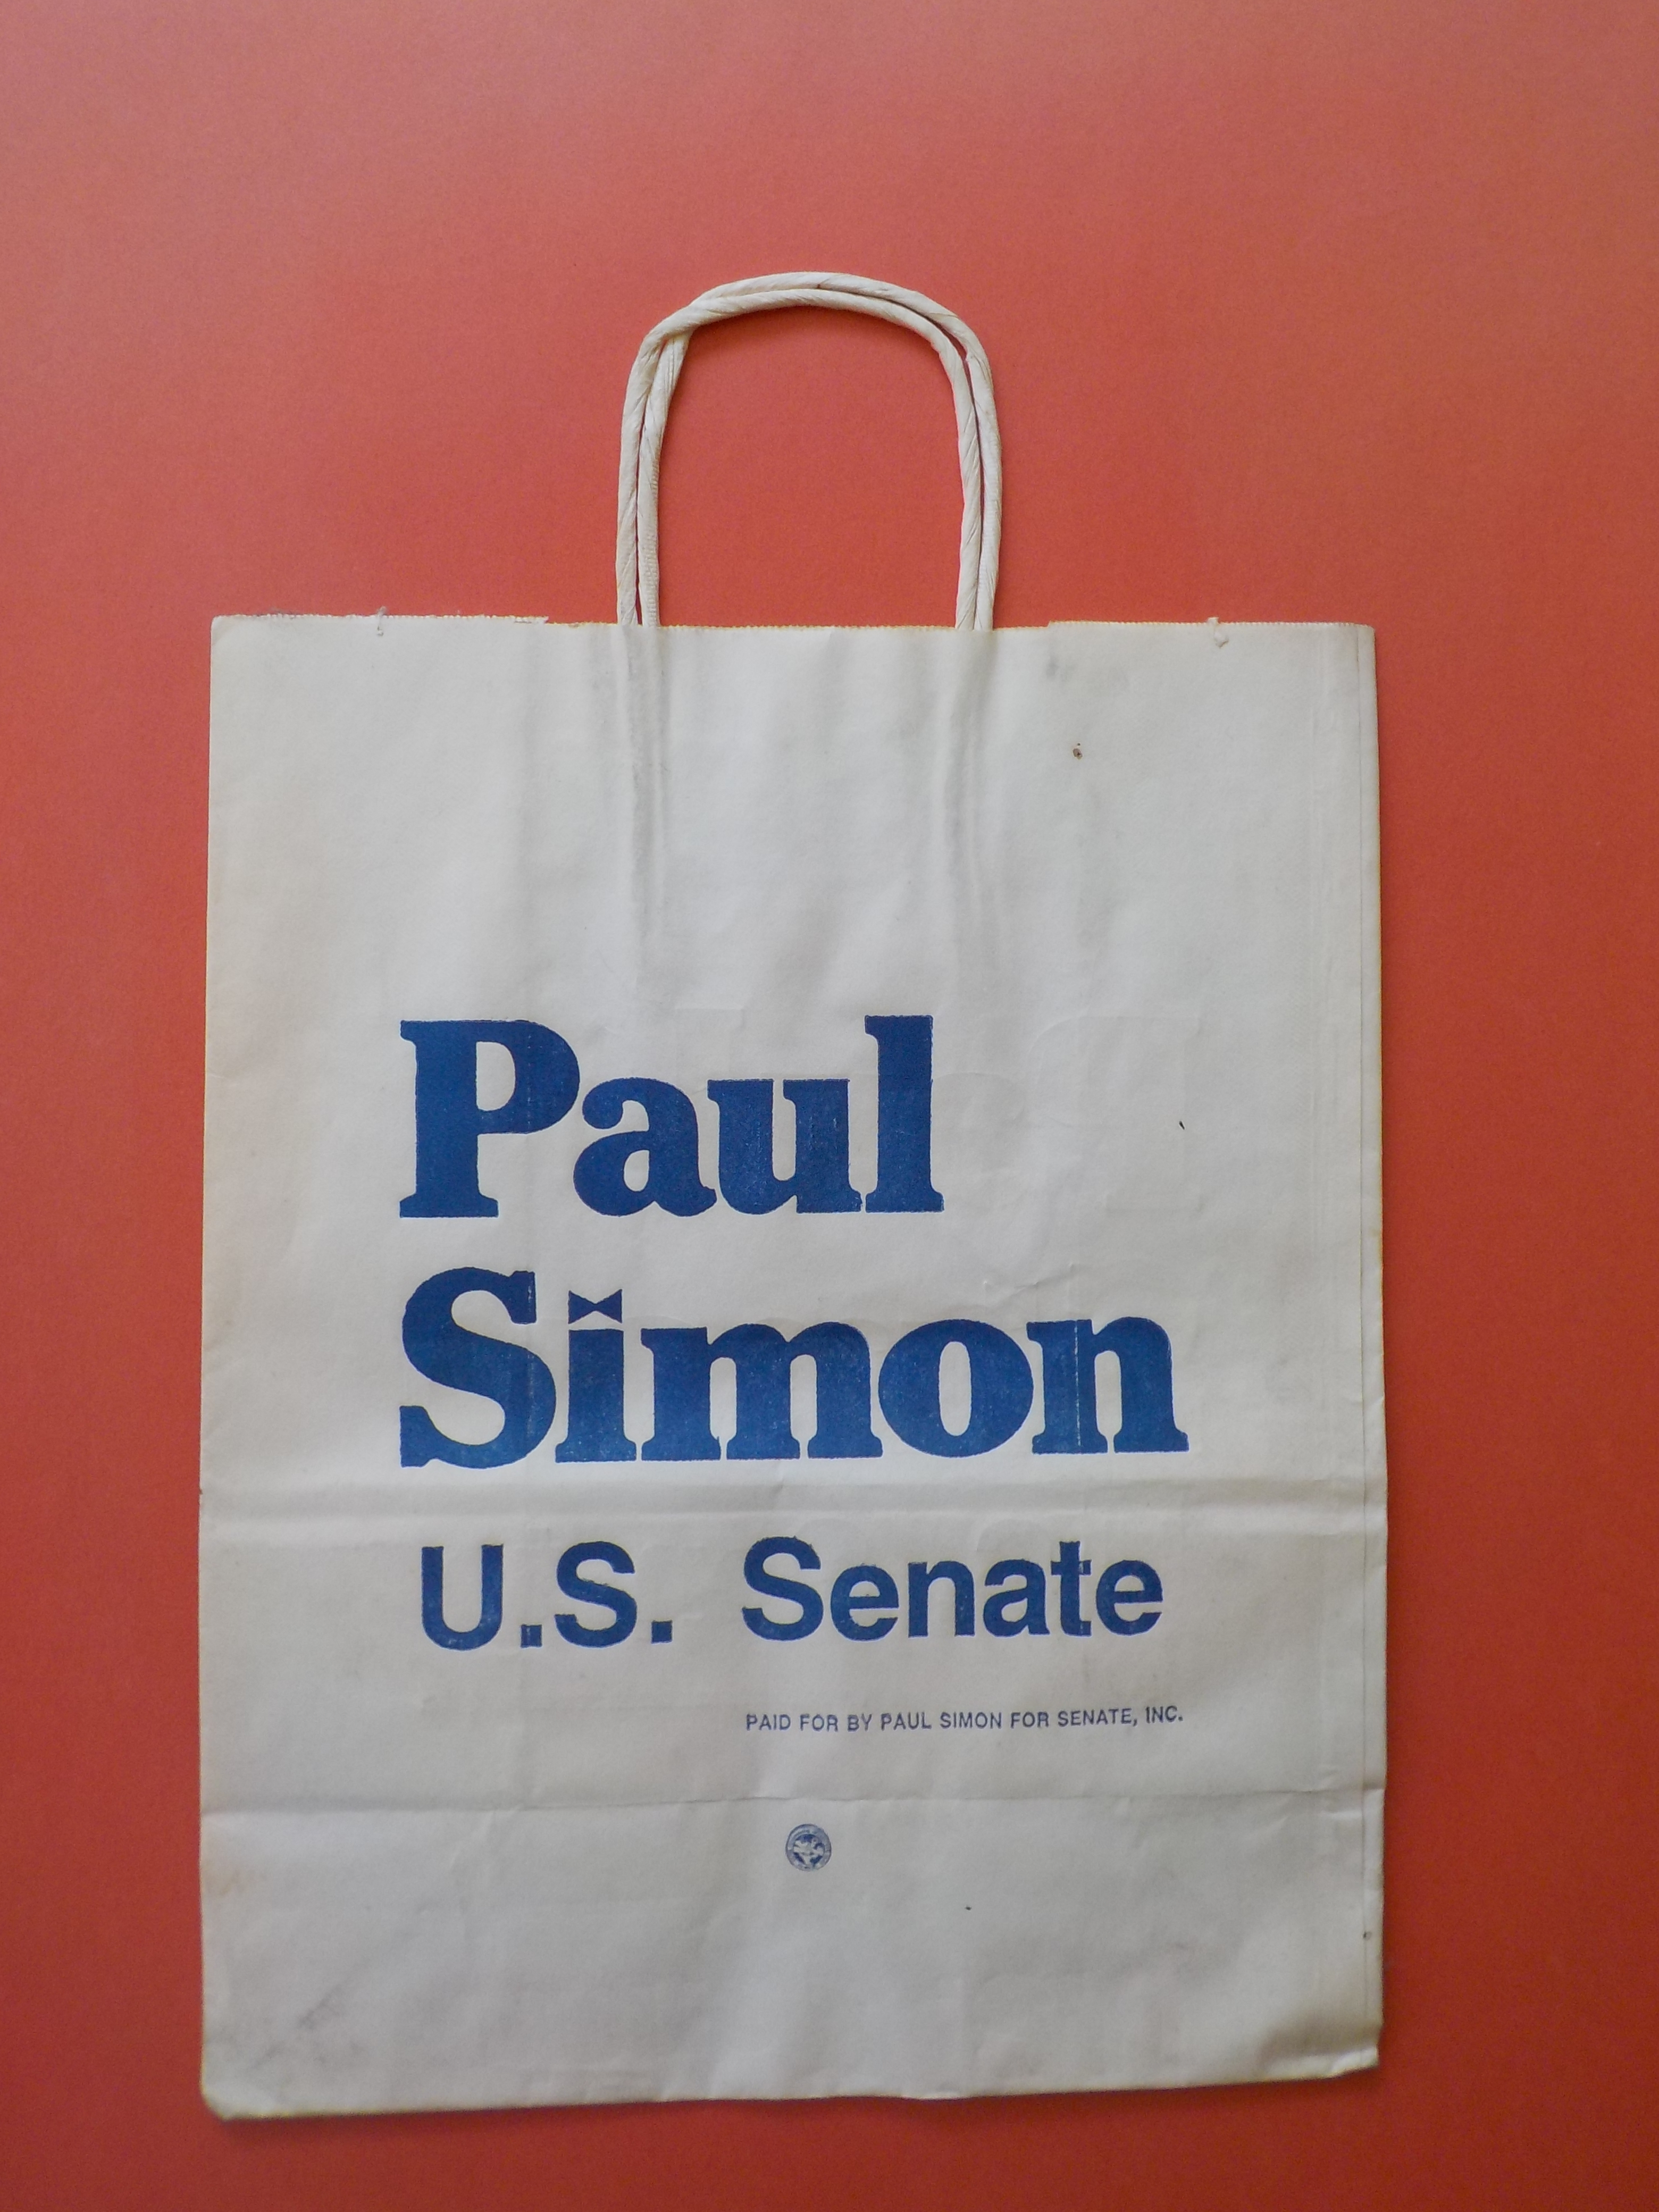 Paul Simon bag